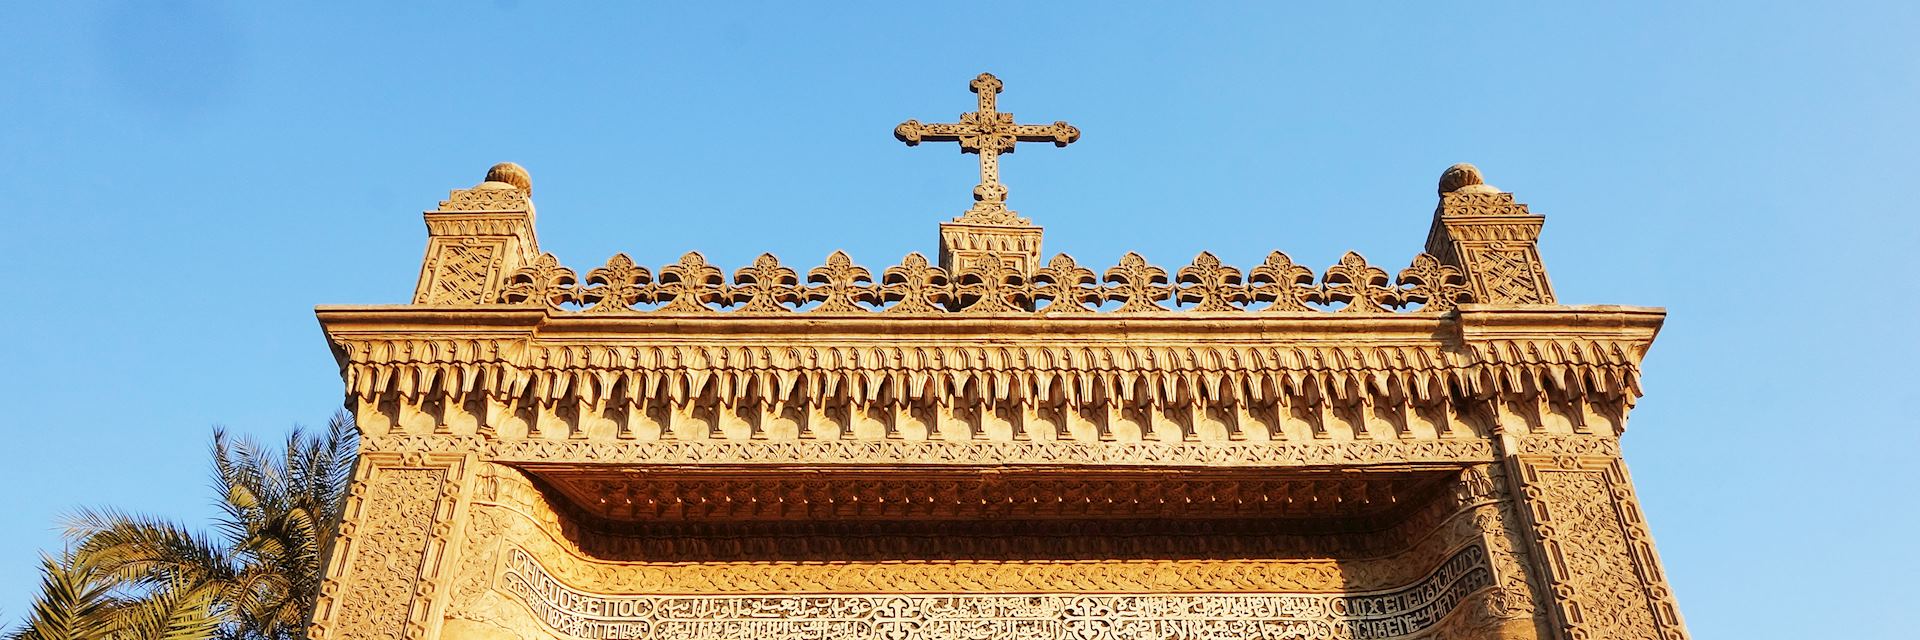 Coptic church, Cairo